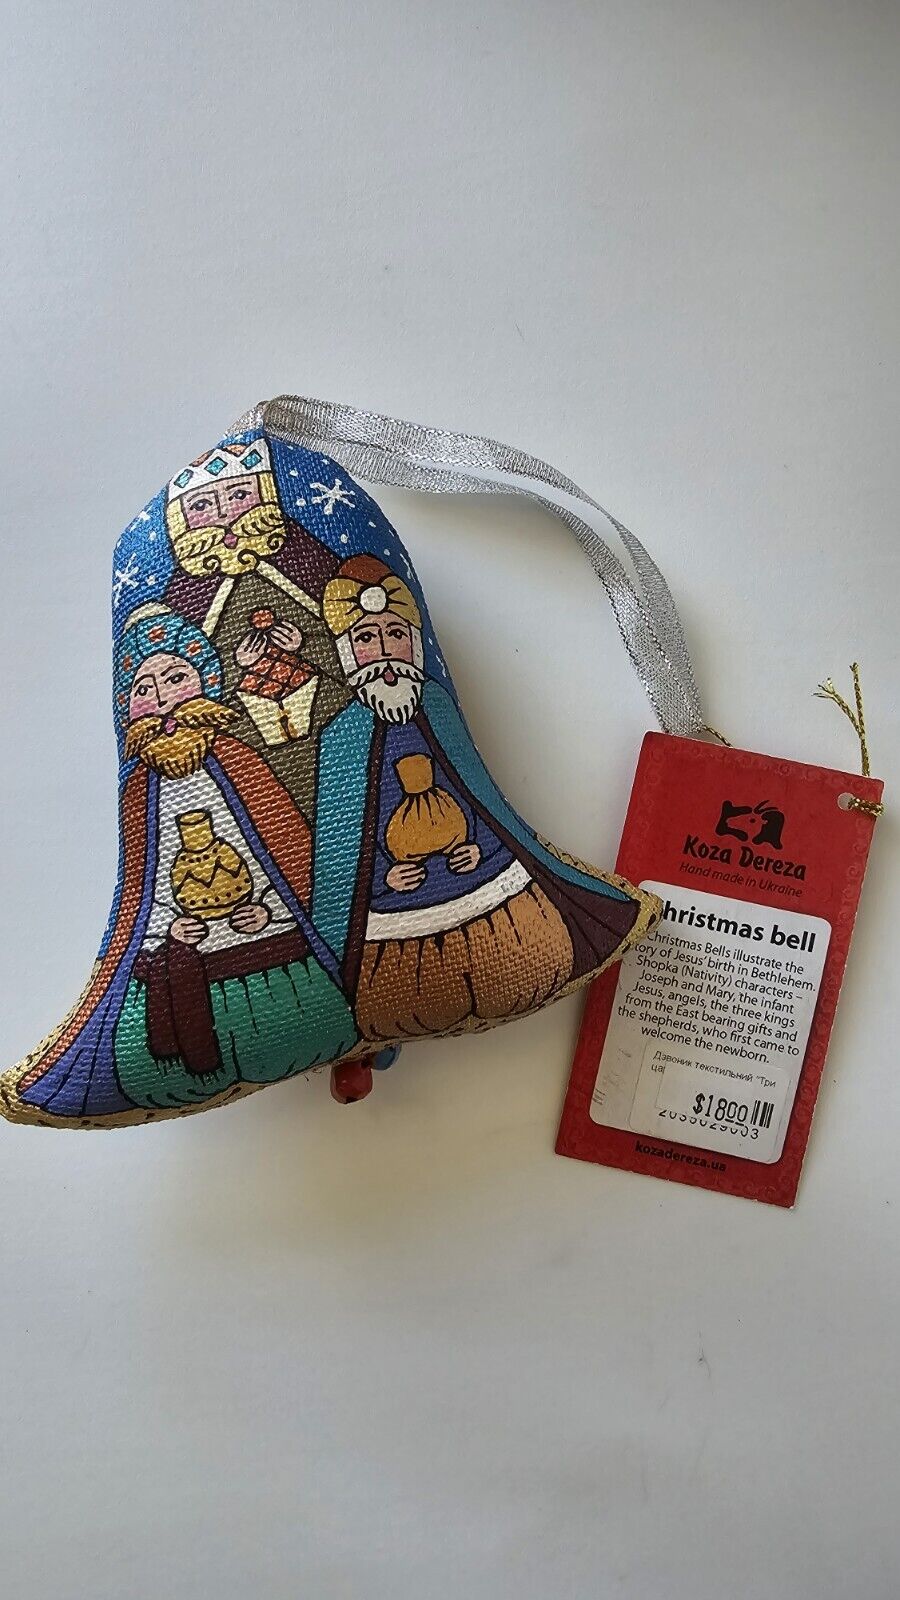 Handmade Fabric Christmas Bell Ornament Made In Ukraine 3 Wise Men Koza Dereza